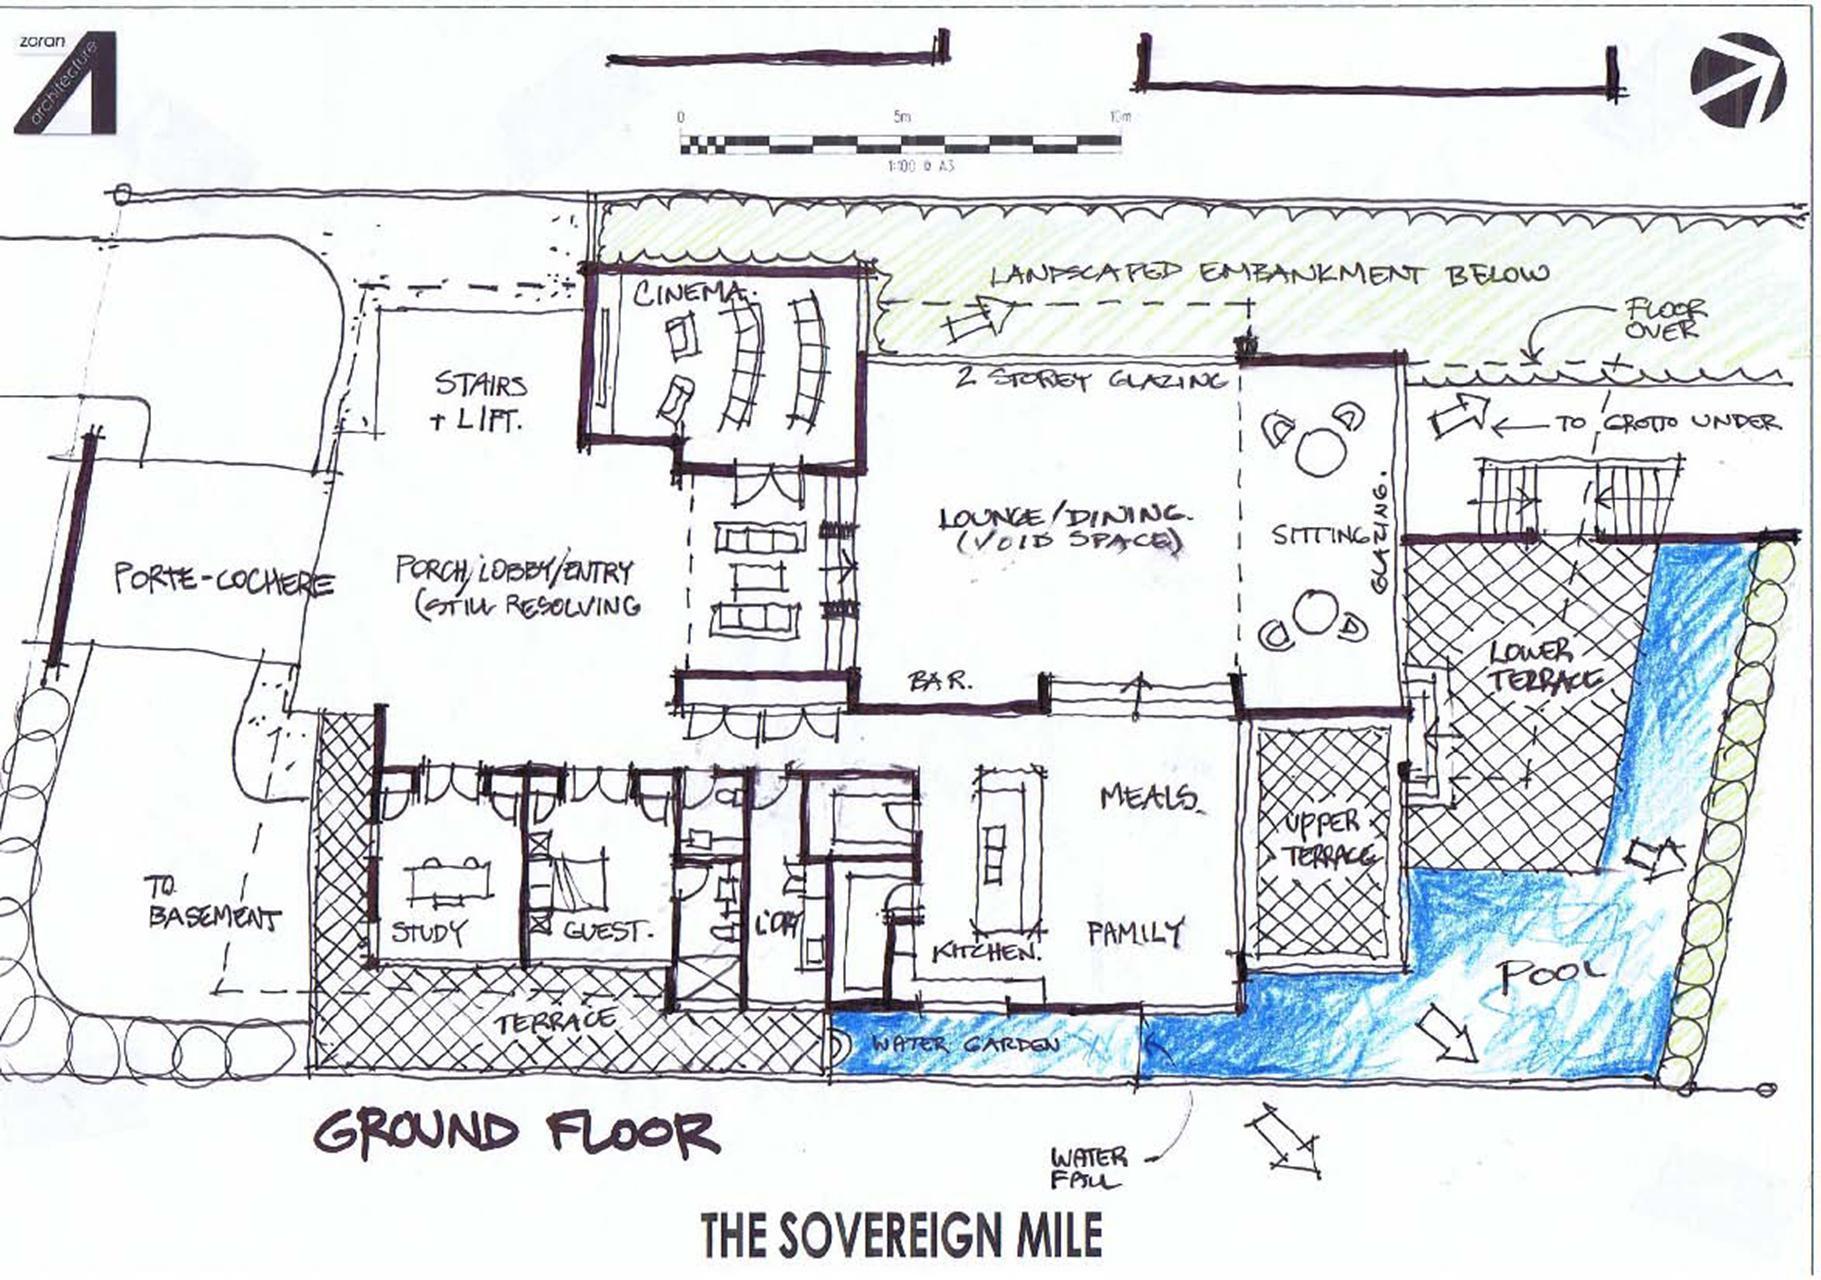 concept 1 - ground floor (level 1)